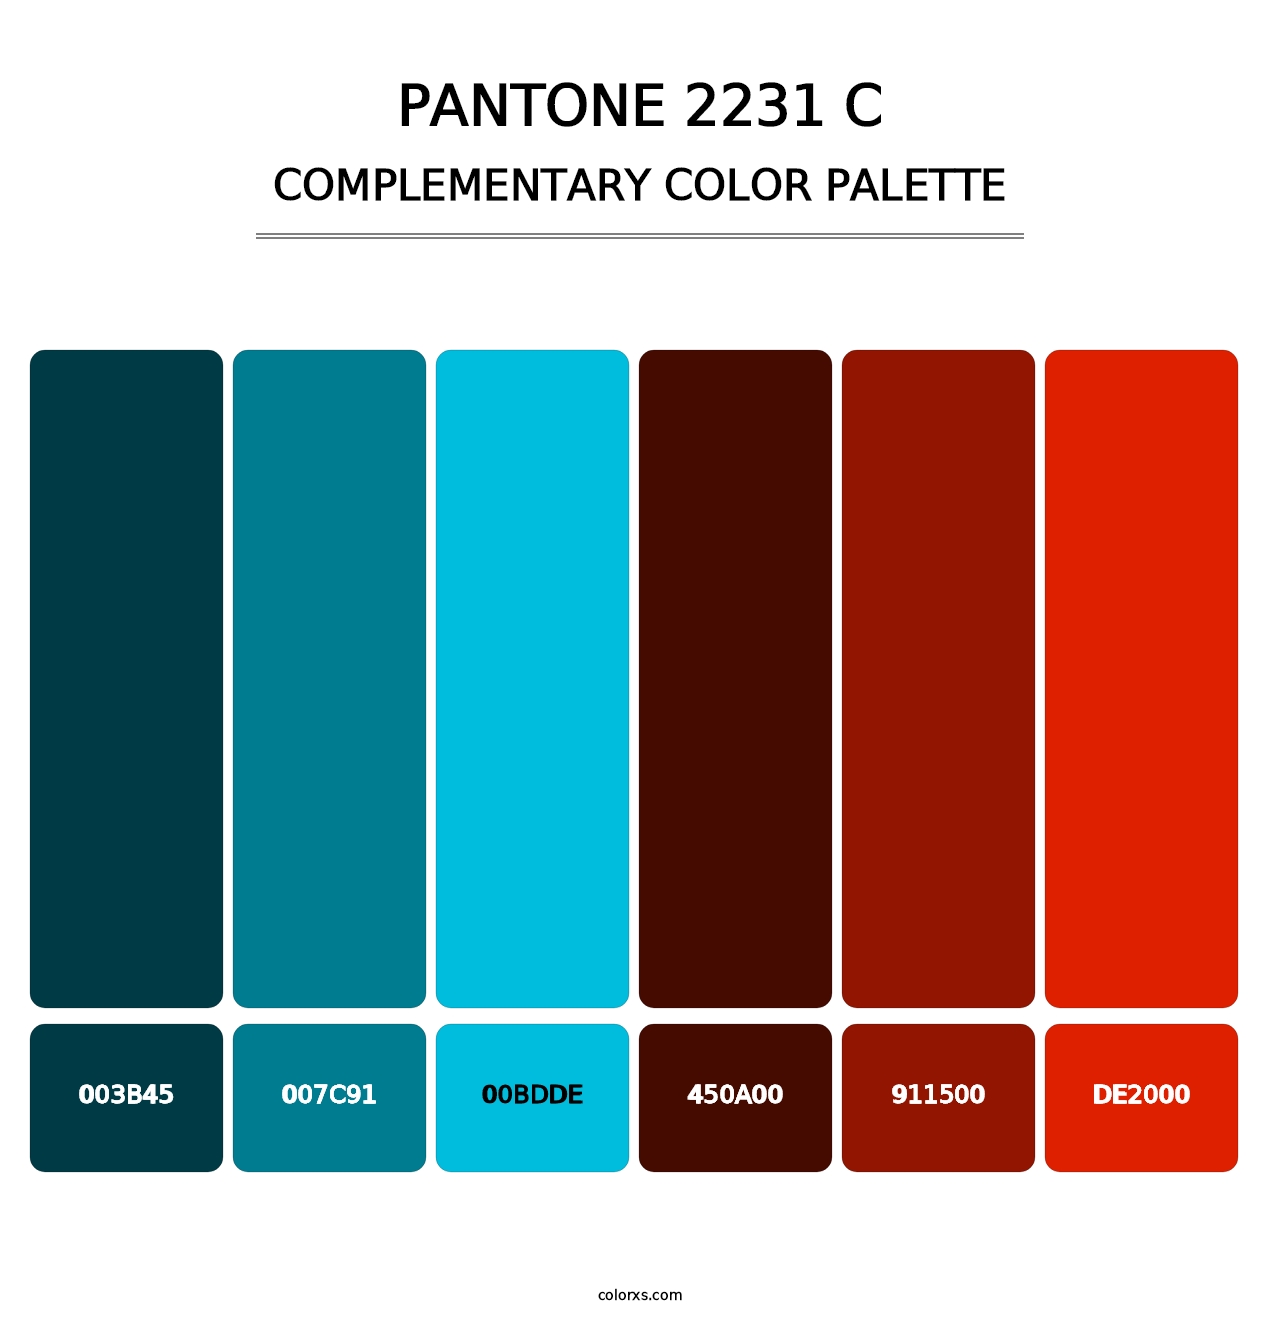 PANTONE 2231 C - Complementary Color Palette